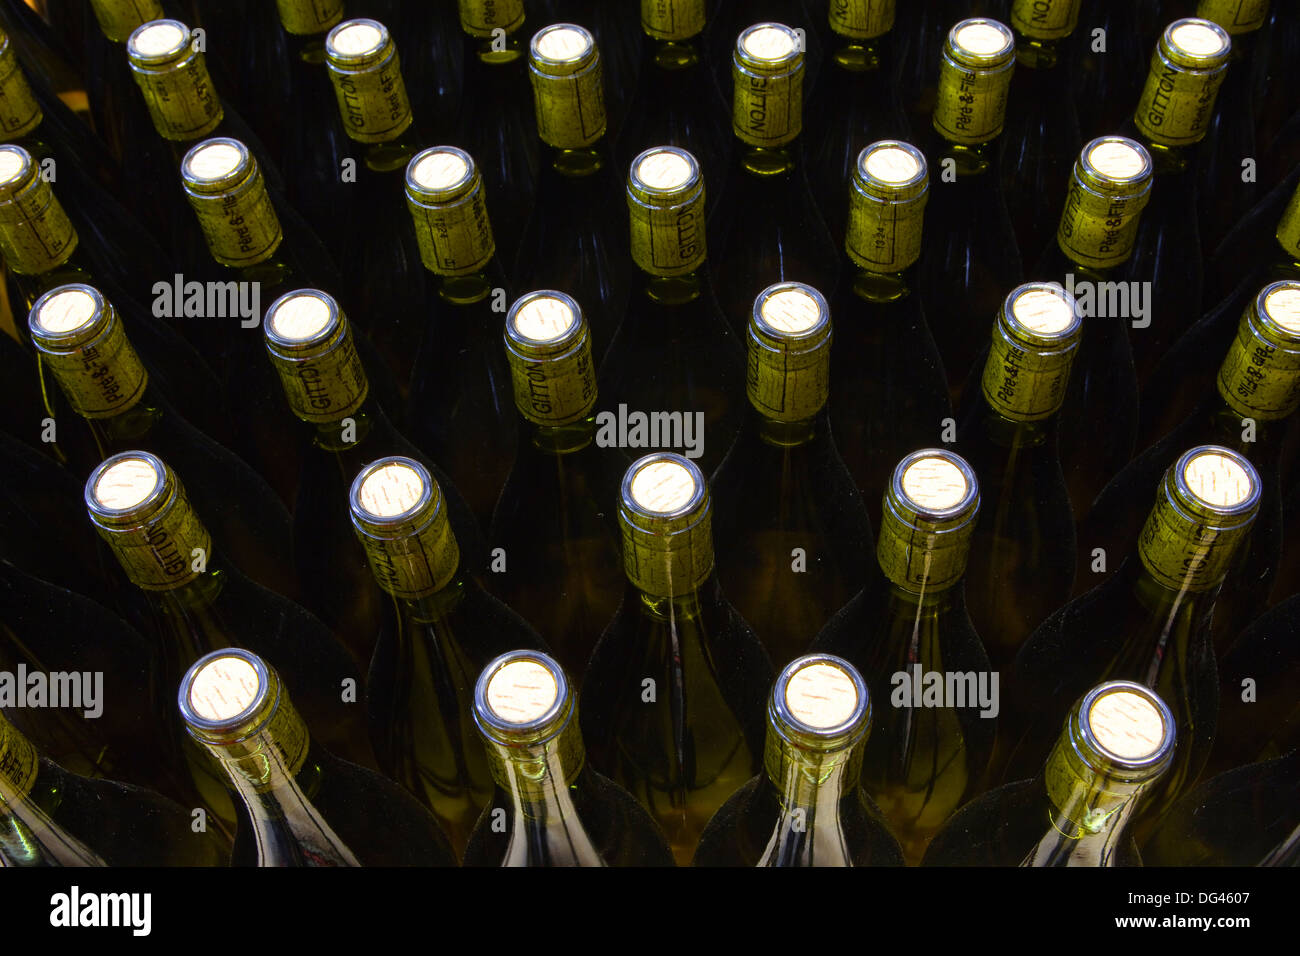 Unlabelled wine bottles, France, Europe Stock Photo